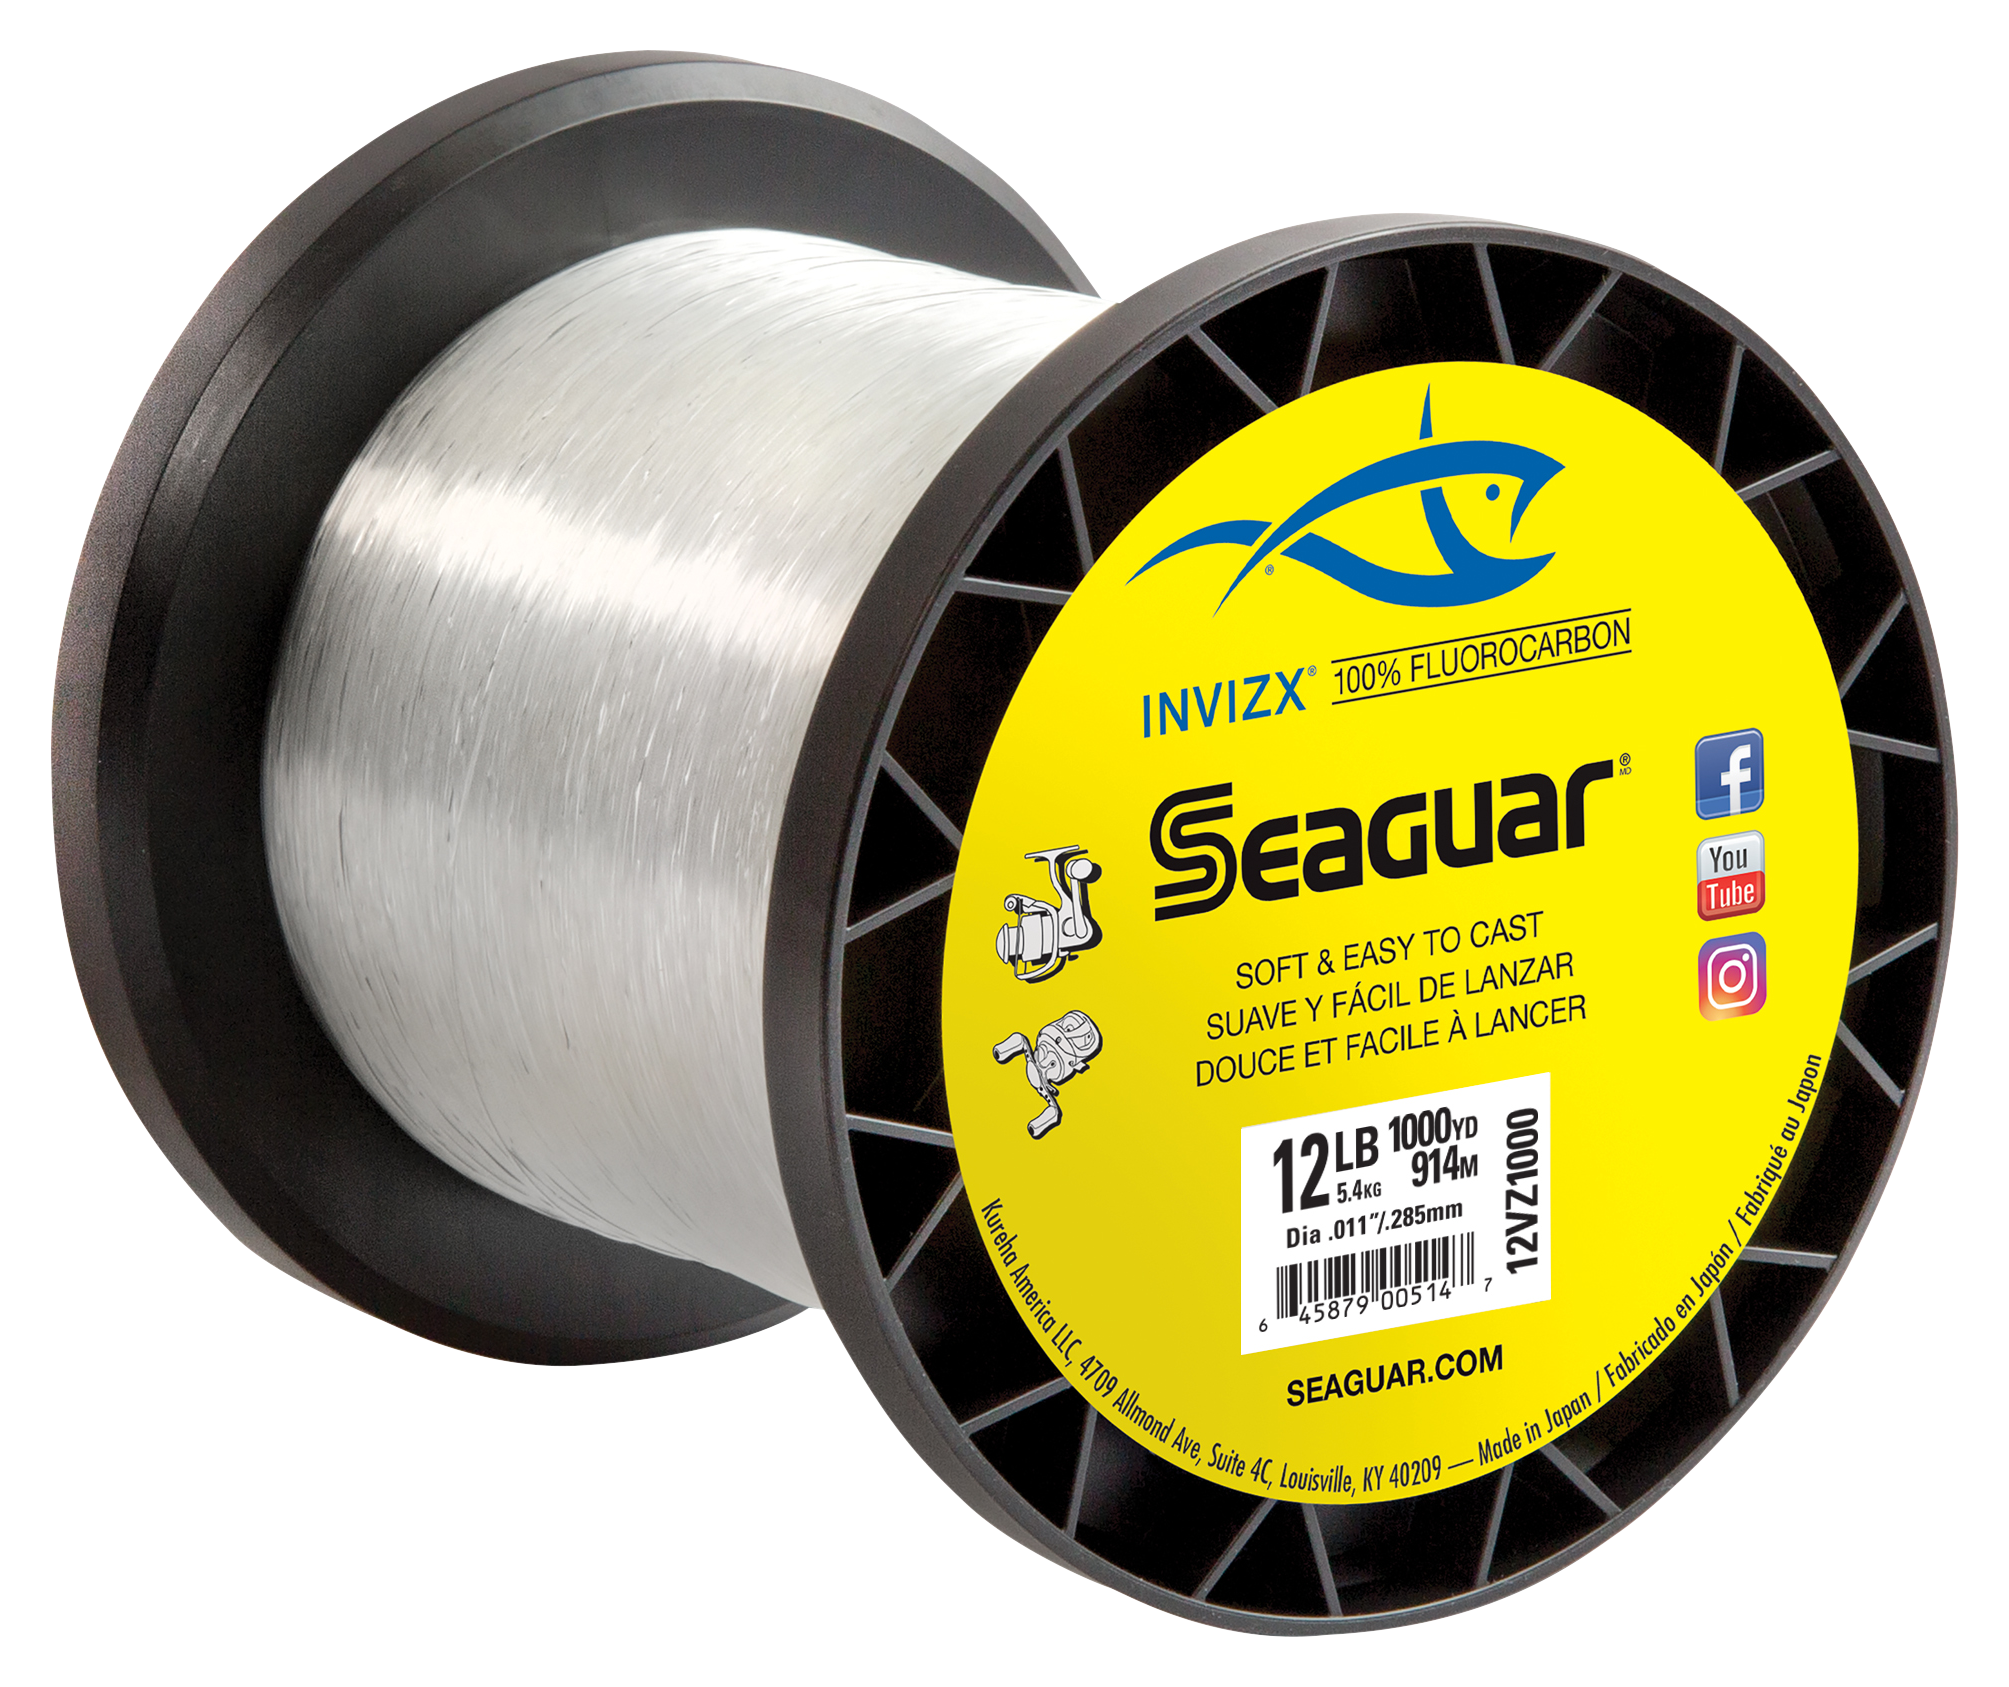 Seaguar AbrazX, 10LB 1,000 Yard Spools